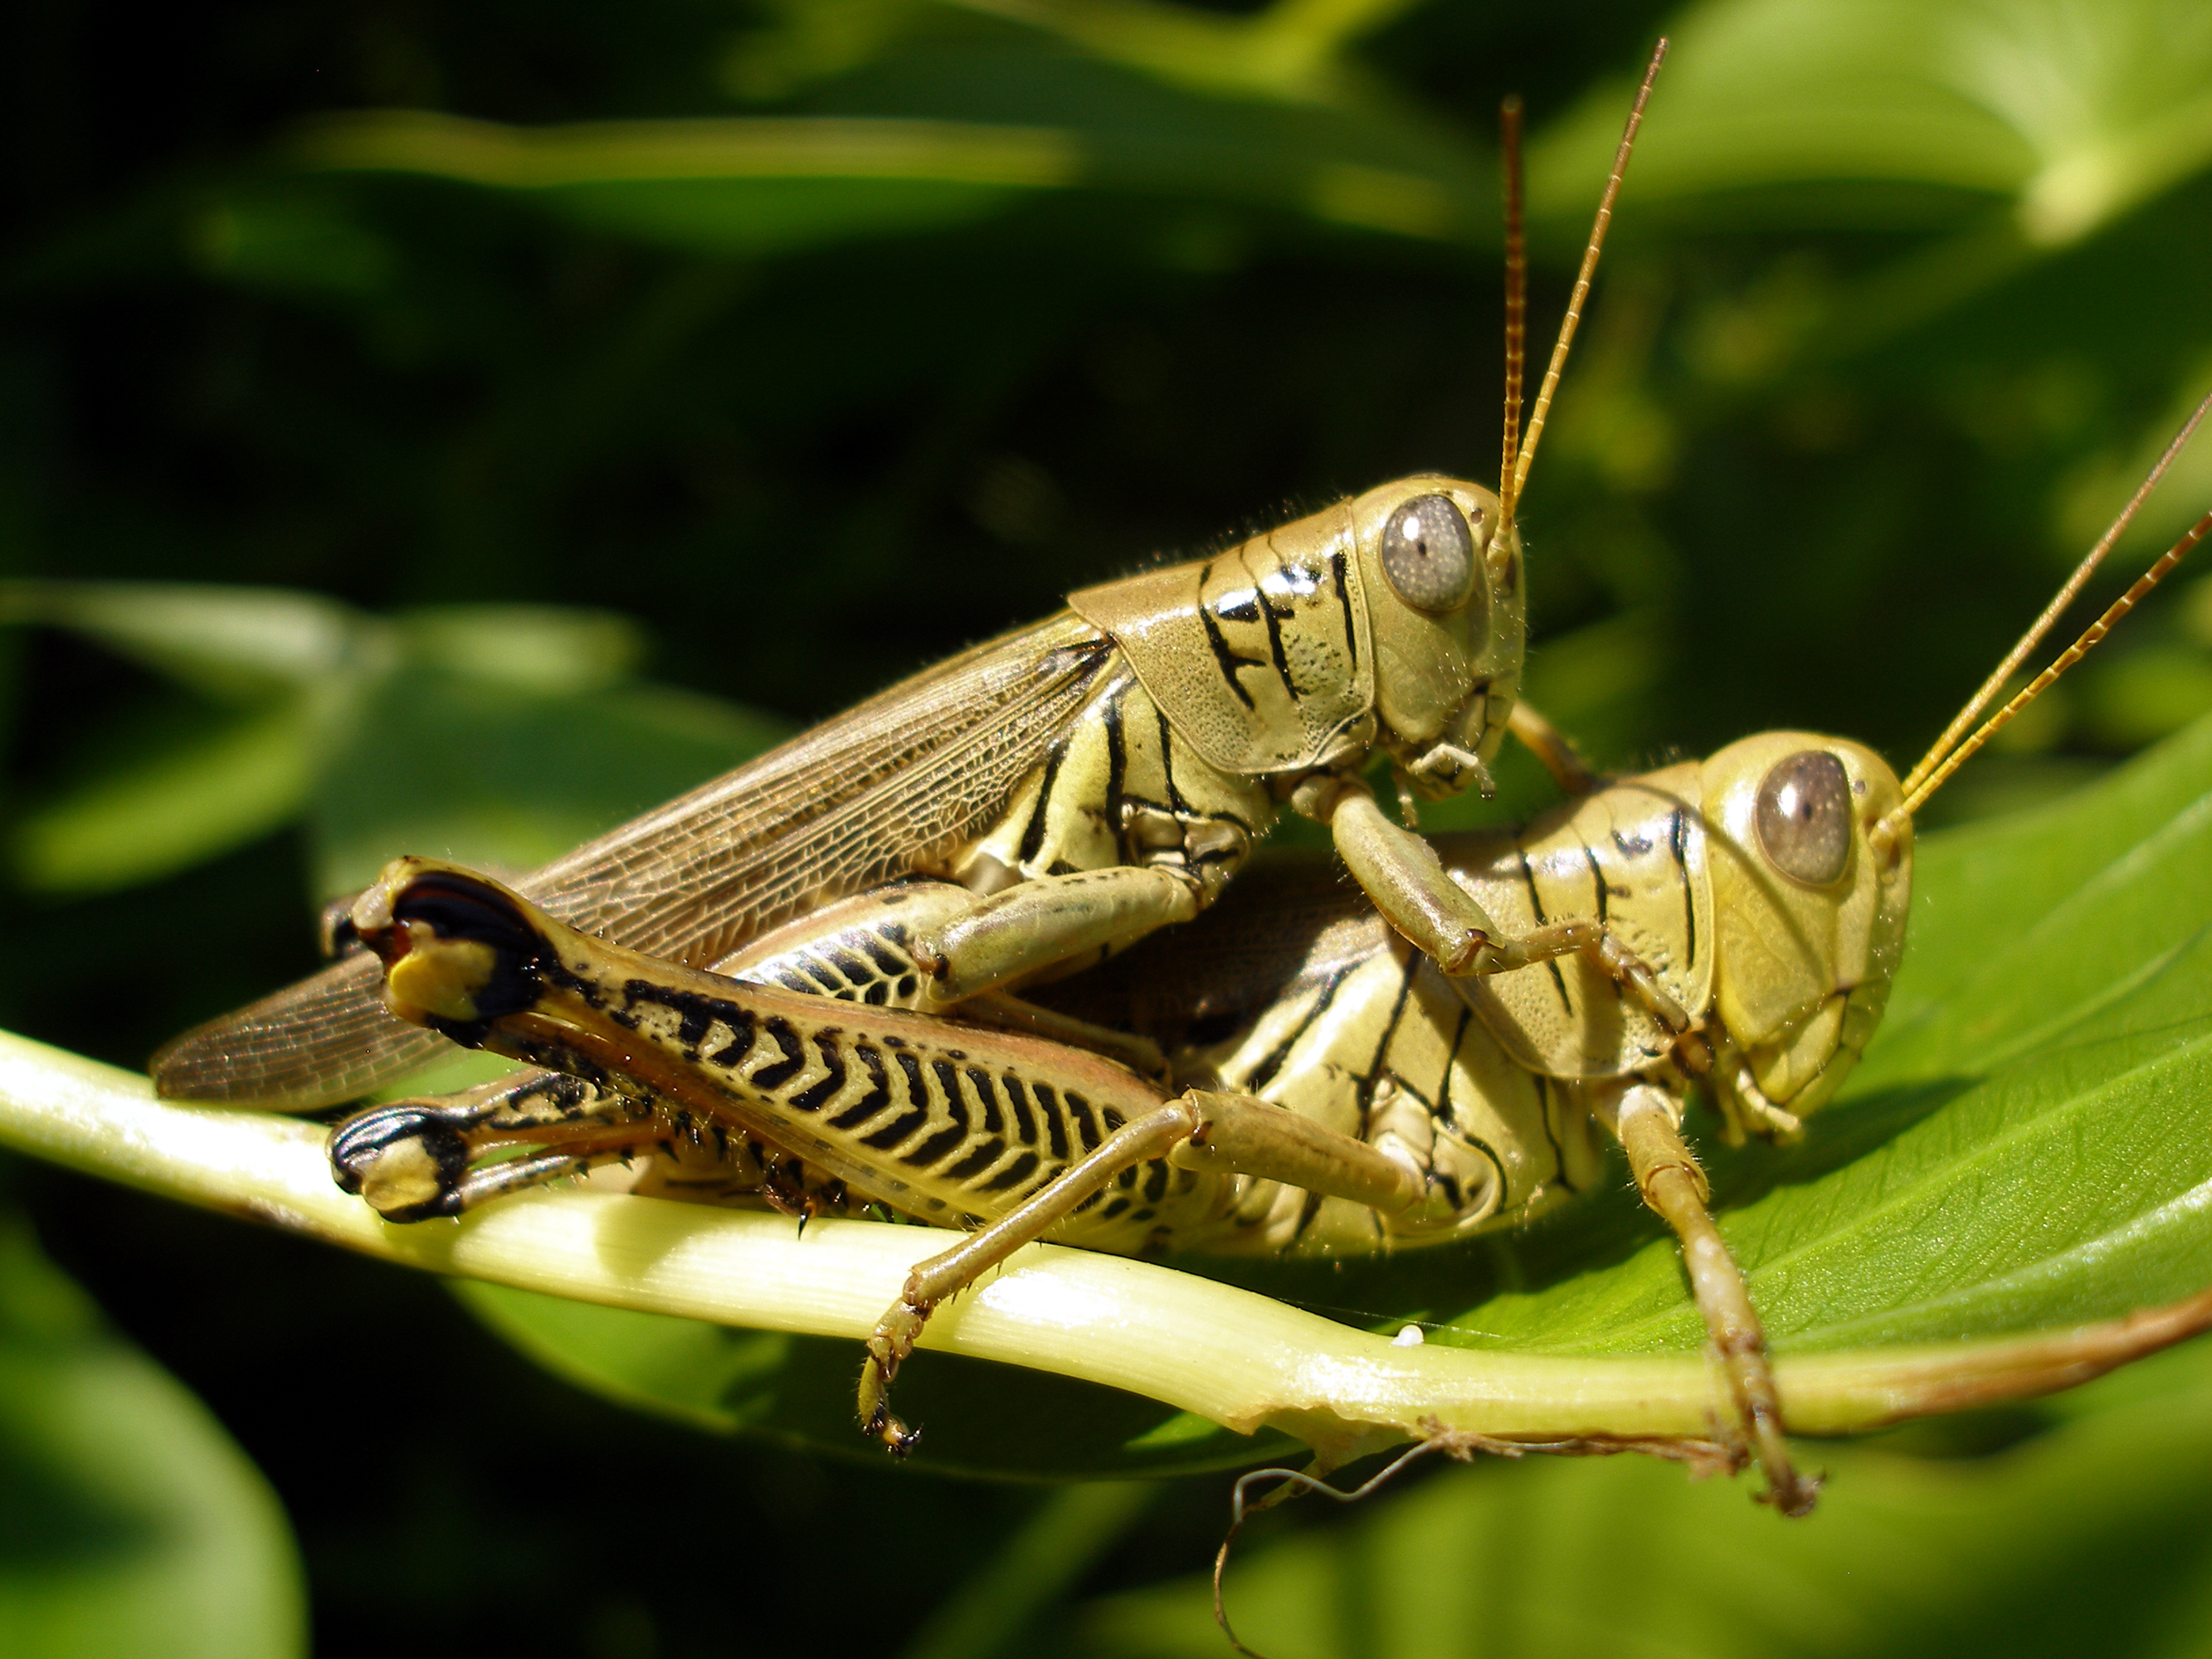 File:Grasshopper at MGSP.jpg - Wikimedia Commons